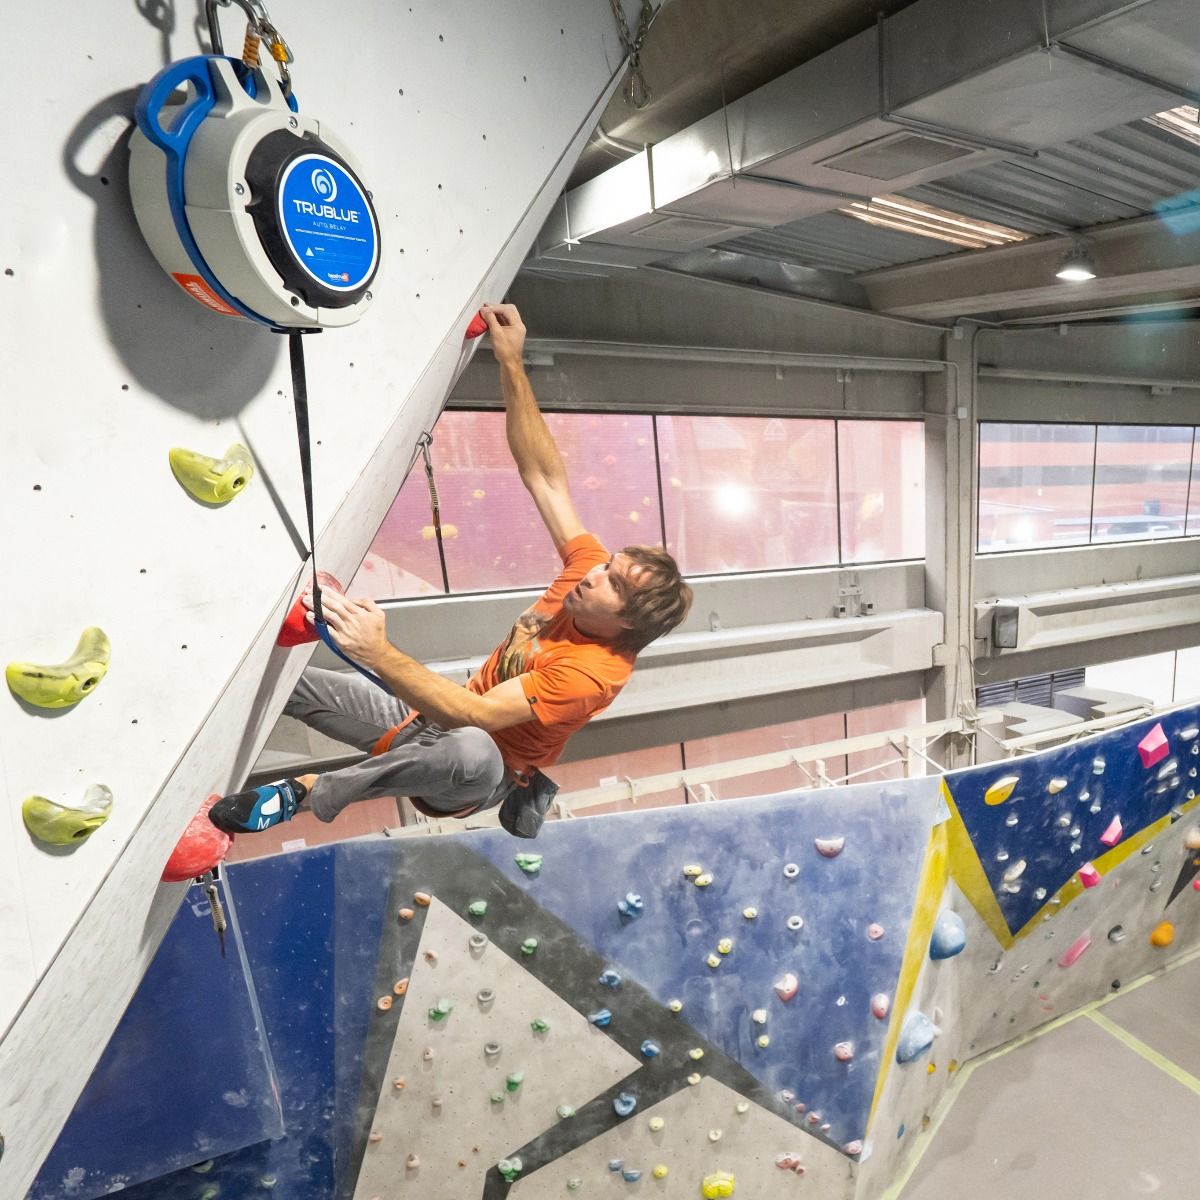 Chris Sharma climbing on a TRUBLUE Auto Belay in an indoor rock climbing gym.